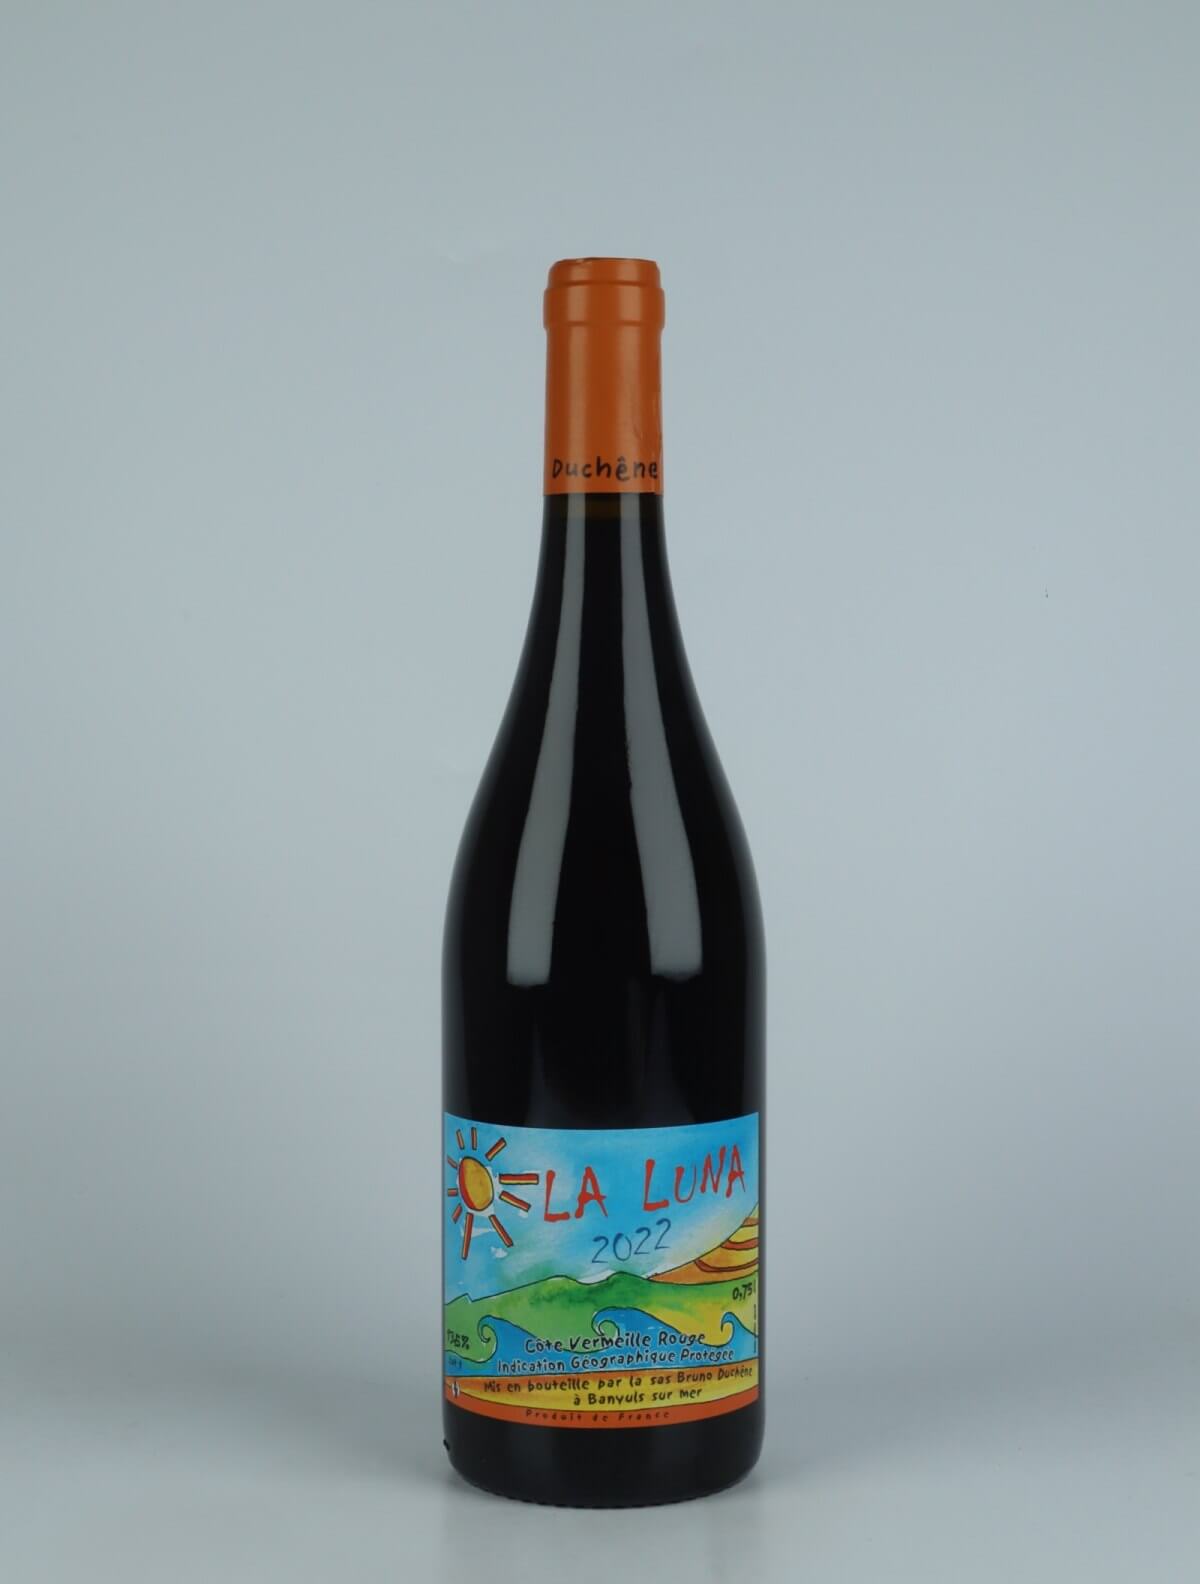 A bottle 2022 La Luna Rouge Red wine from Bruno Duchêne, Rousillon in France